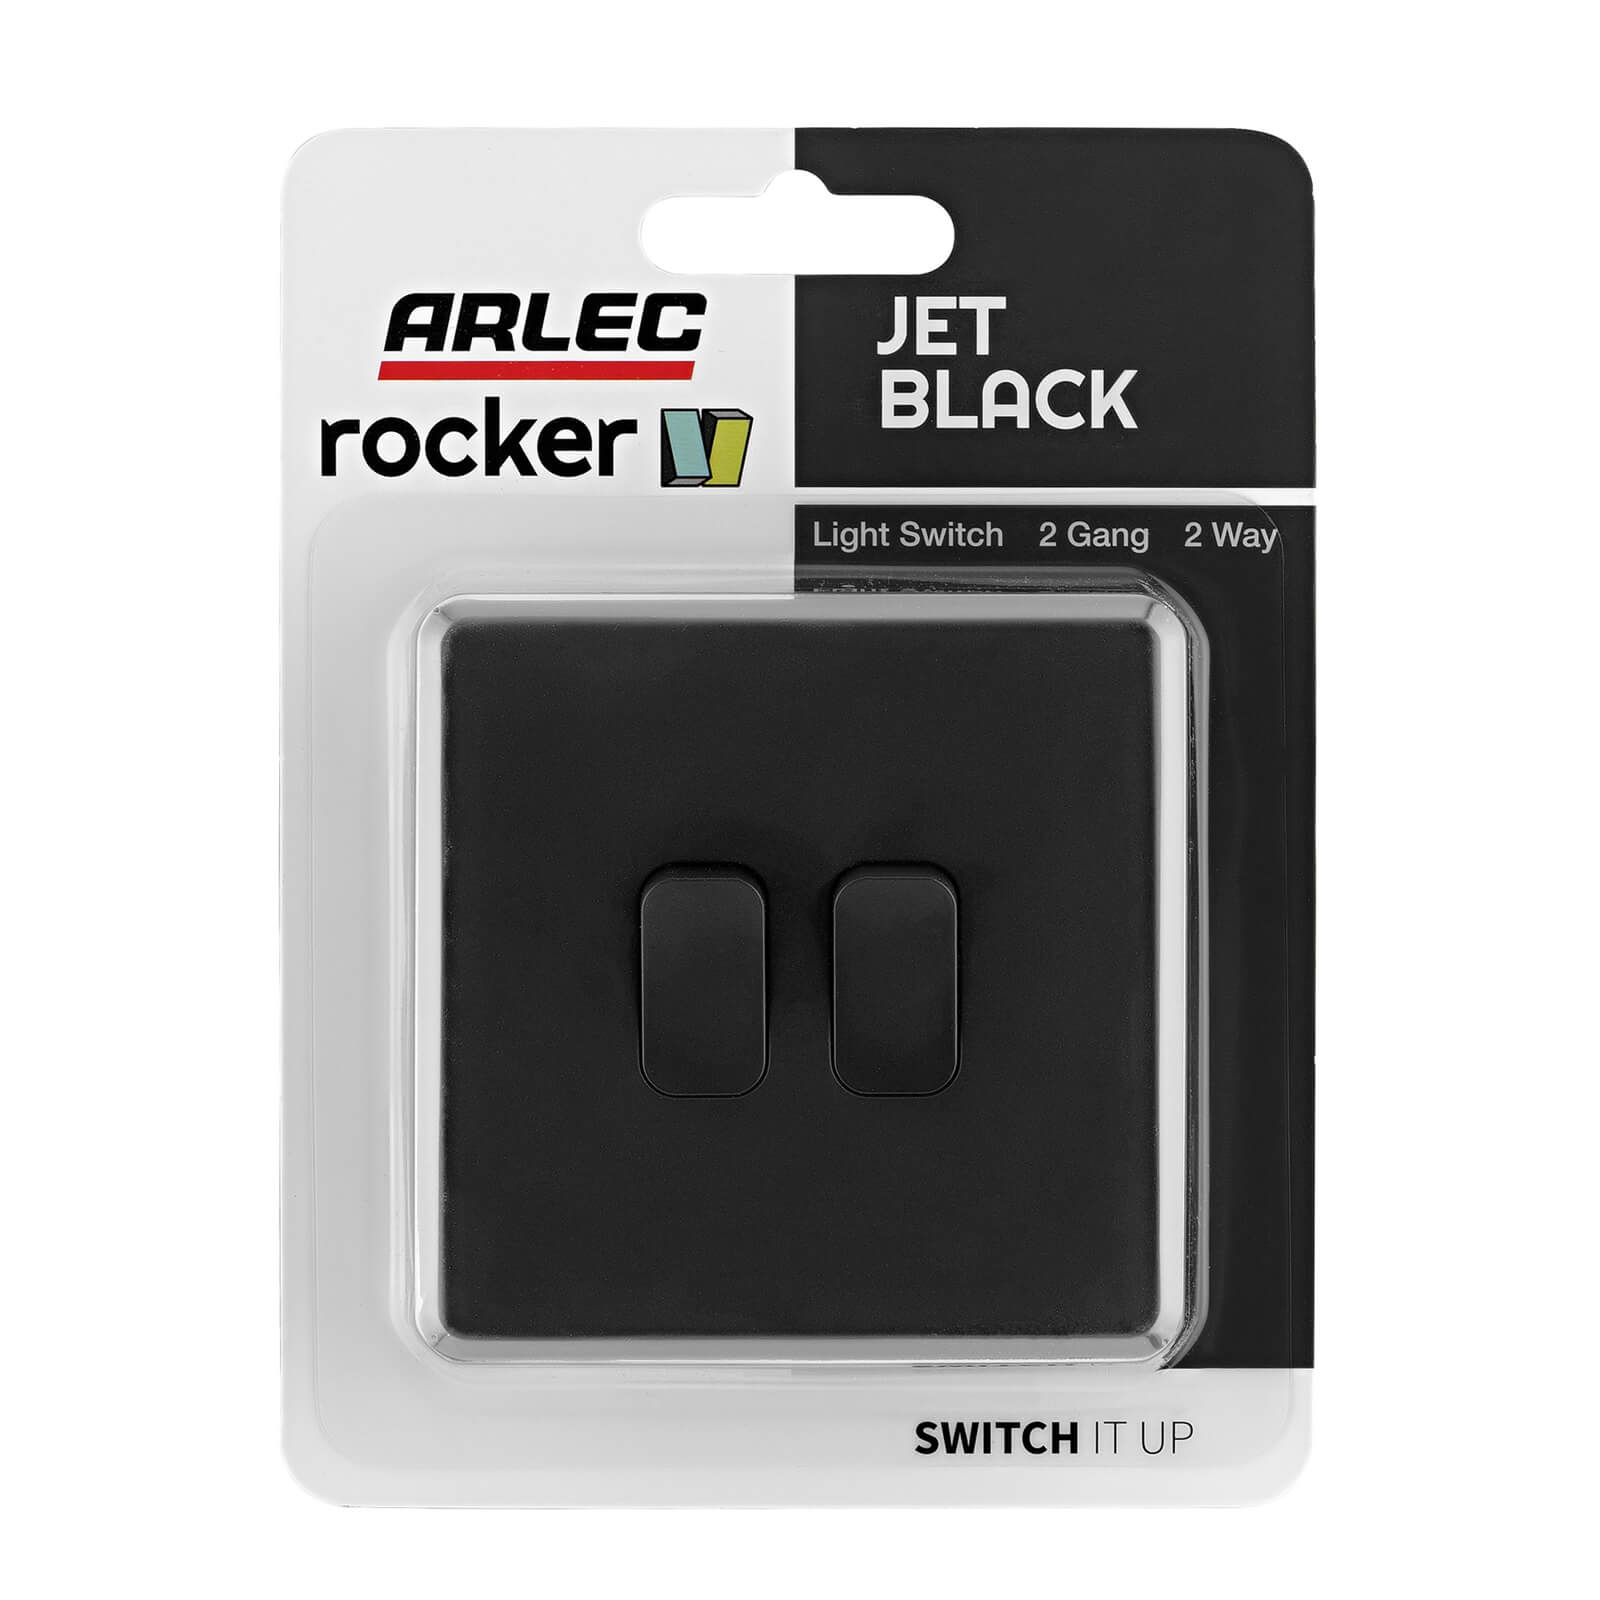 Arlec Rocker 10A 2Gang 2Way Jet Black Double light switch